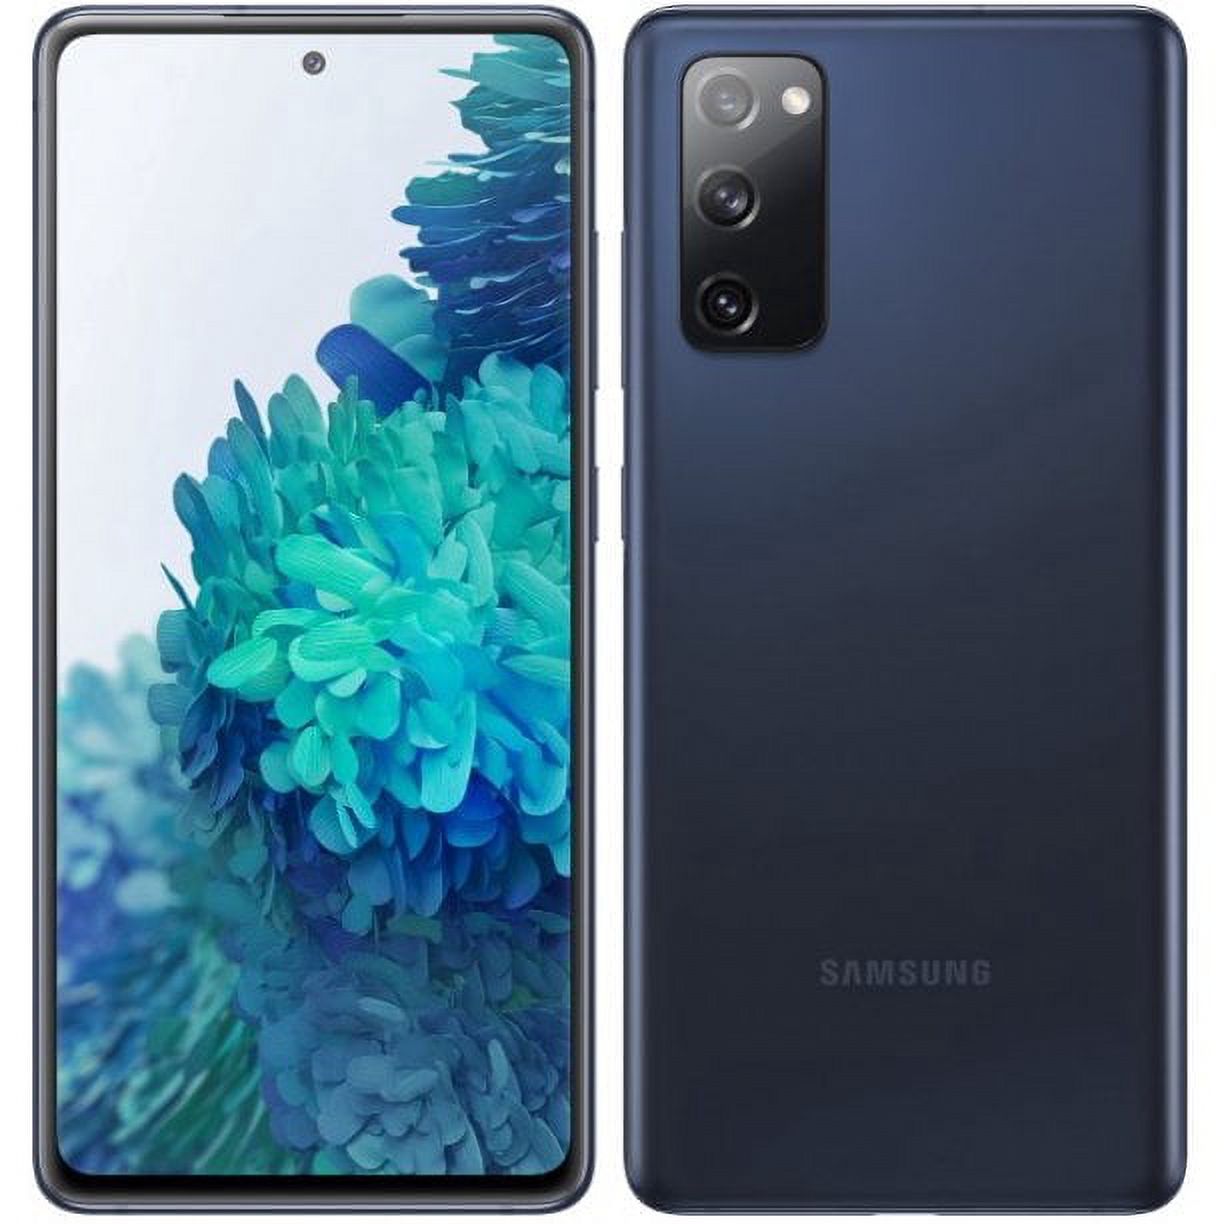 Samsung Galaxy S20 FE 5G - 5G smartphone - RAM 6 GB / Internal Memory 128 GB - microSD slot - OLED display - 6.5" - 2400 x 1080 pixels (120 Hz) - 3x rear cameras 12 MP, 12 MP, 8 MP - front camera 32 MP - AT&T - cloud navy - image 1 of 7